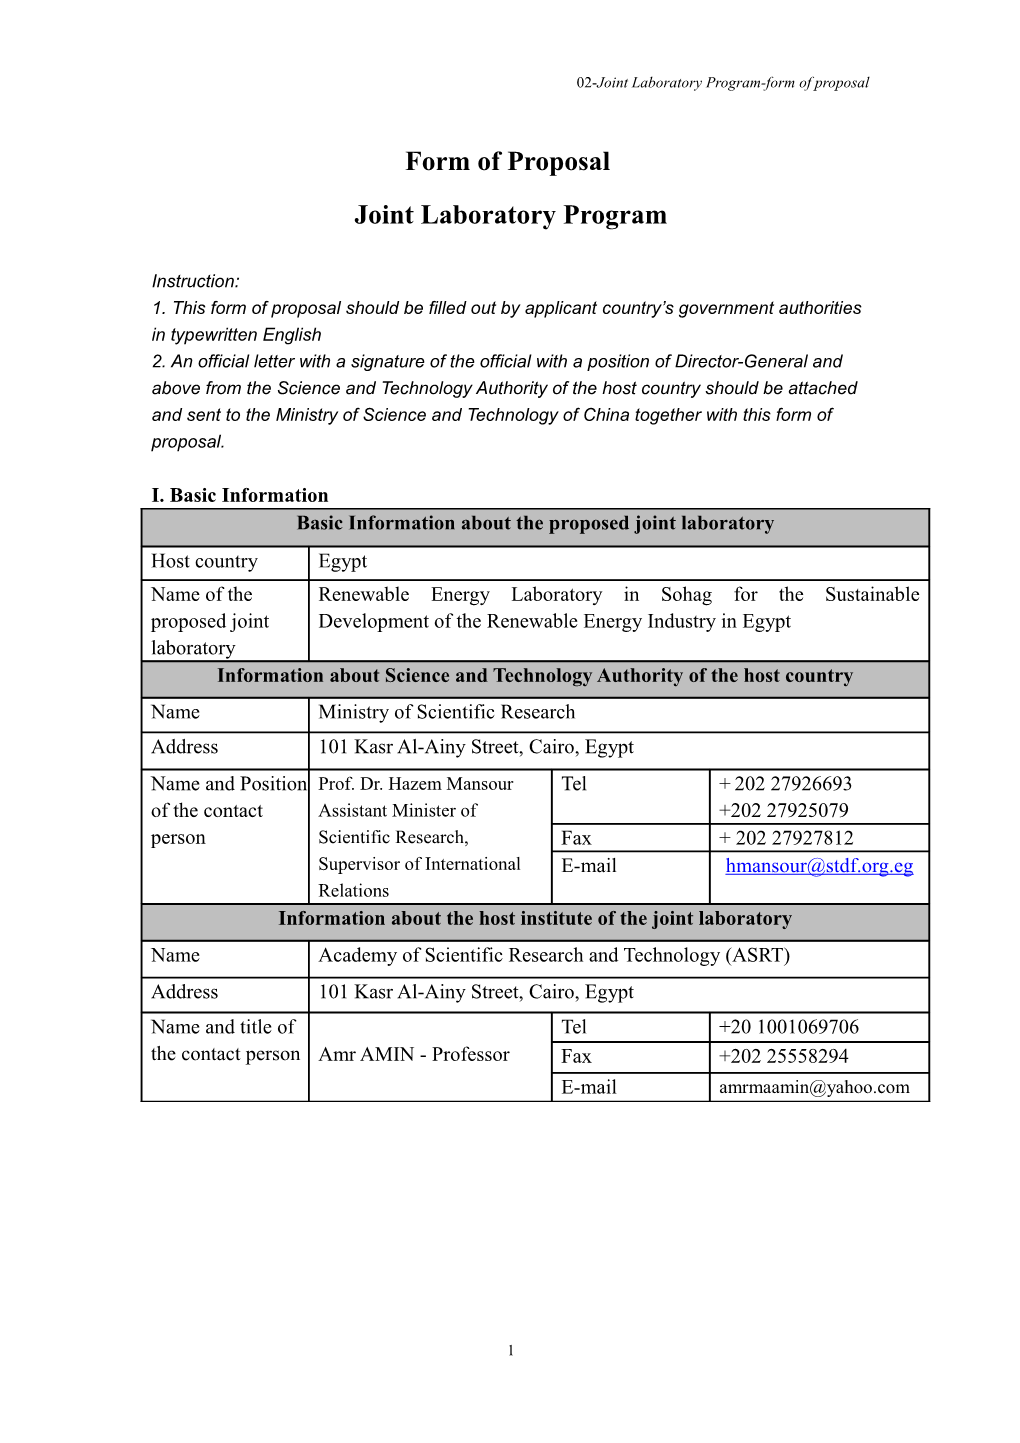 02- Joint Laboratory Program-Form of Proposal